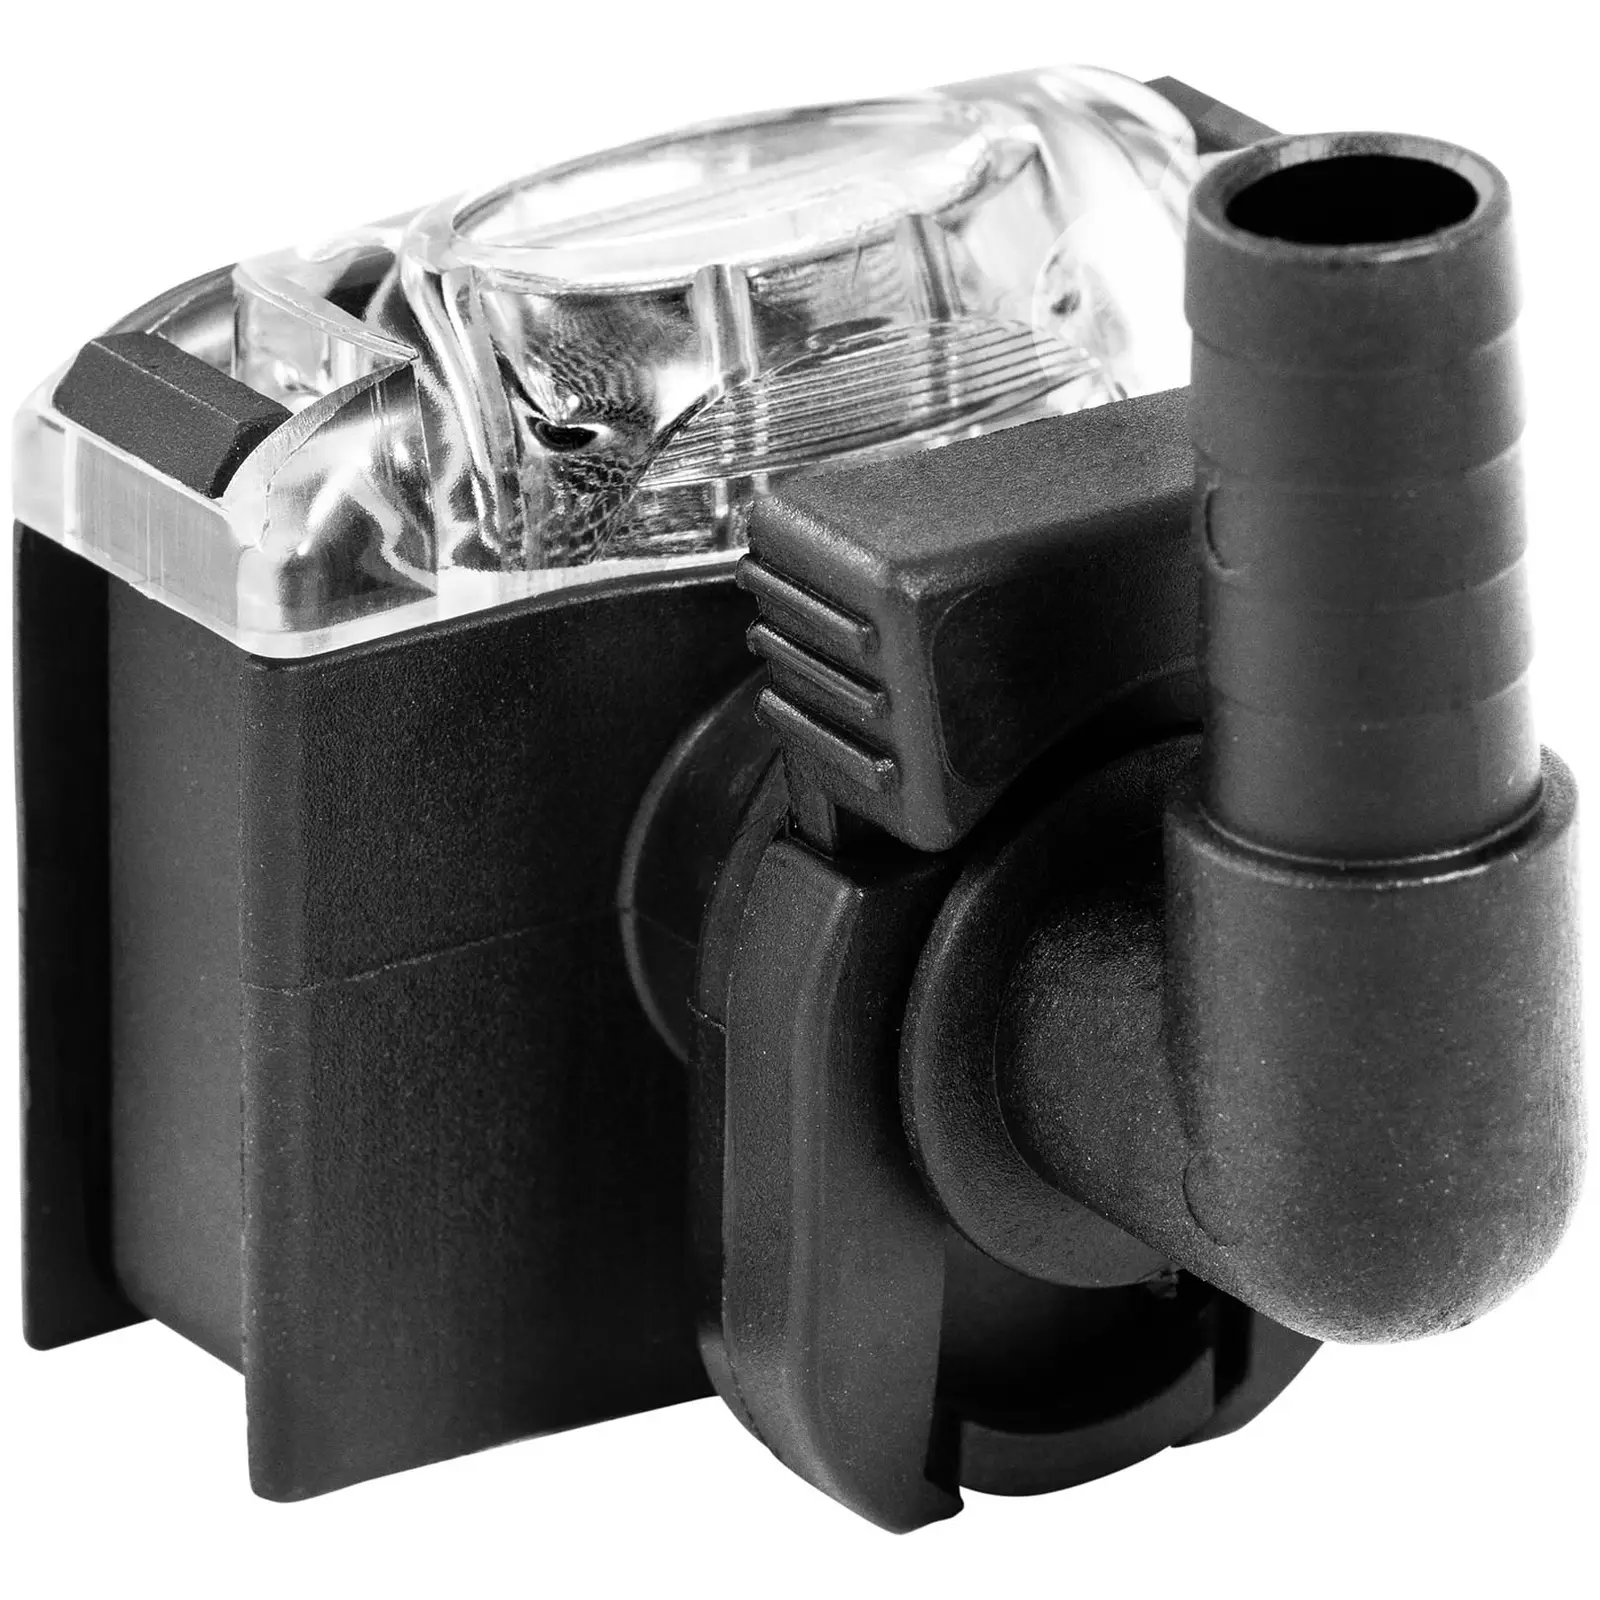 Pompe a eau haute pression avec interrupteur à pression - 12 V - 10 l/min - max. 60 °C - 1,2 bar